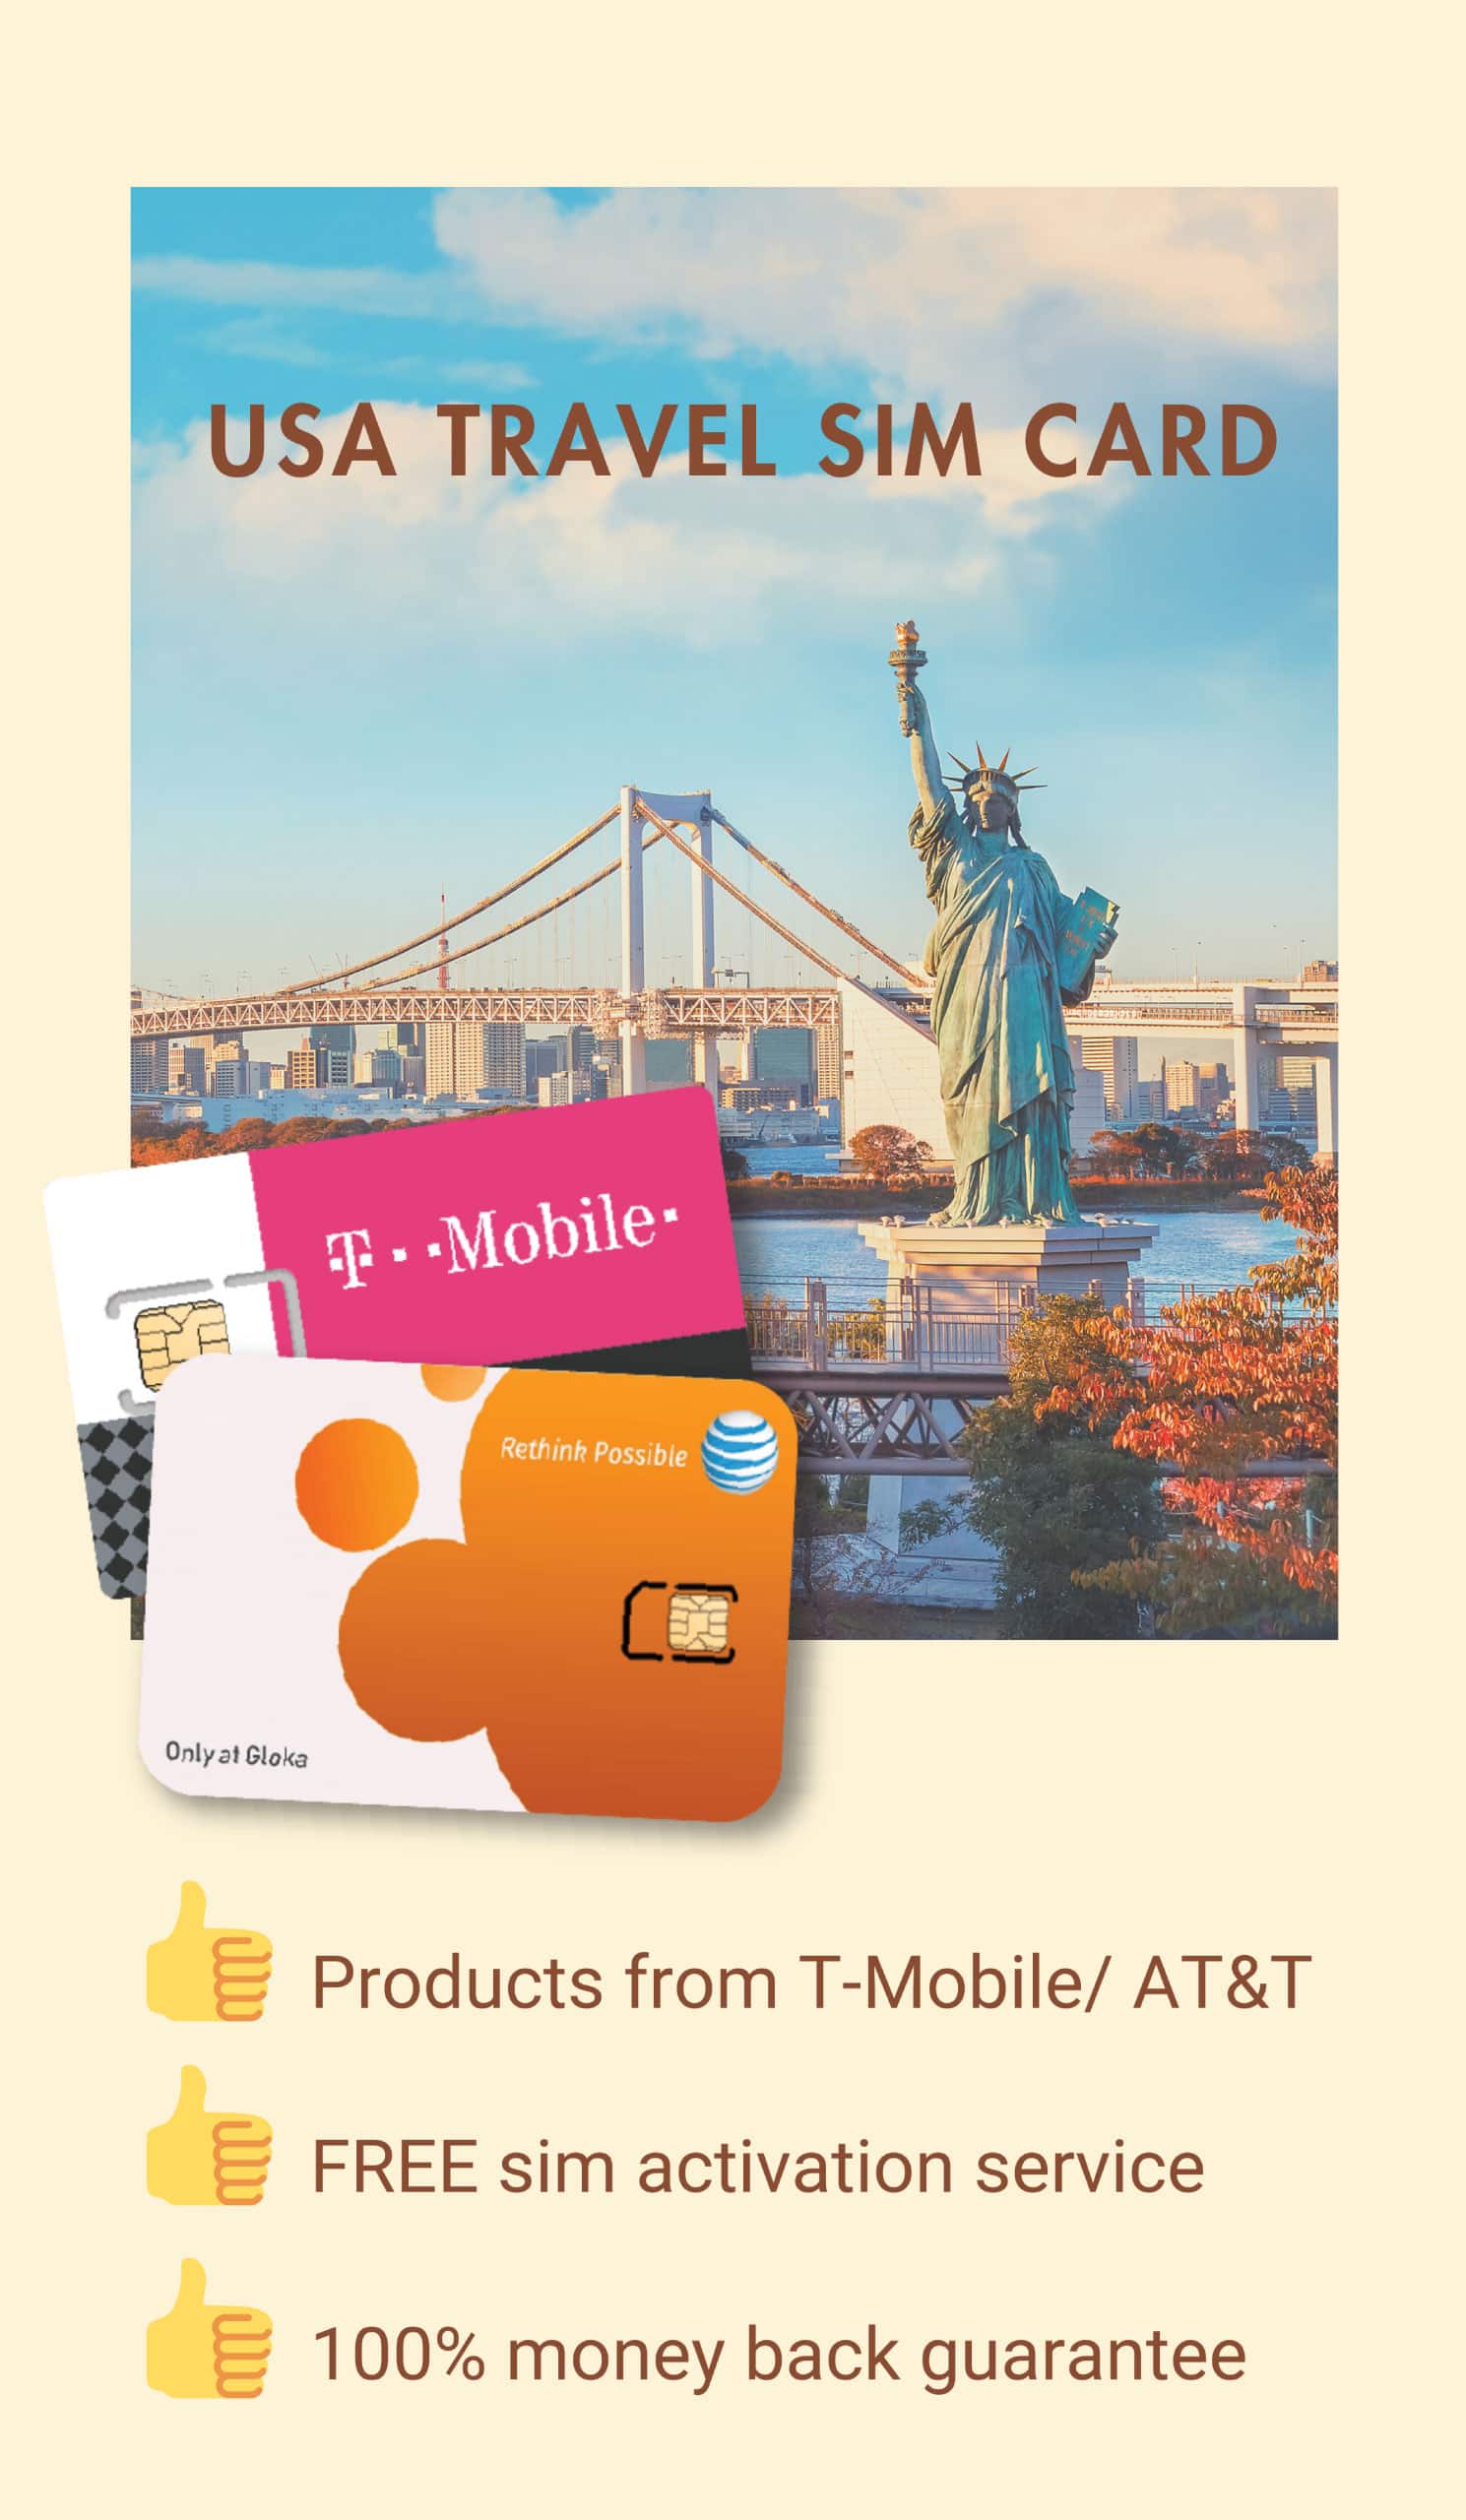 USA travel sim card mobile version